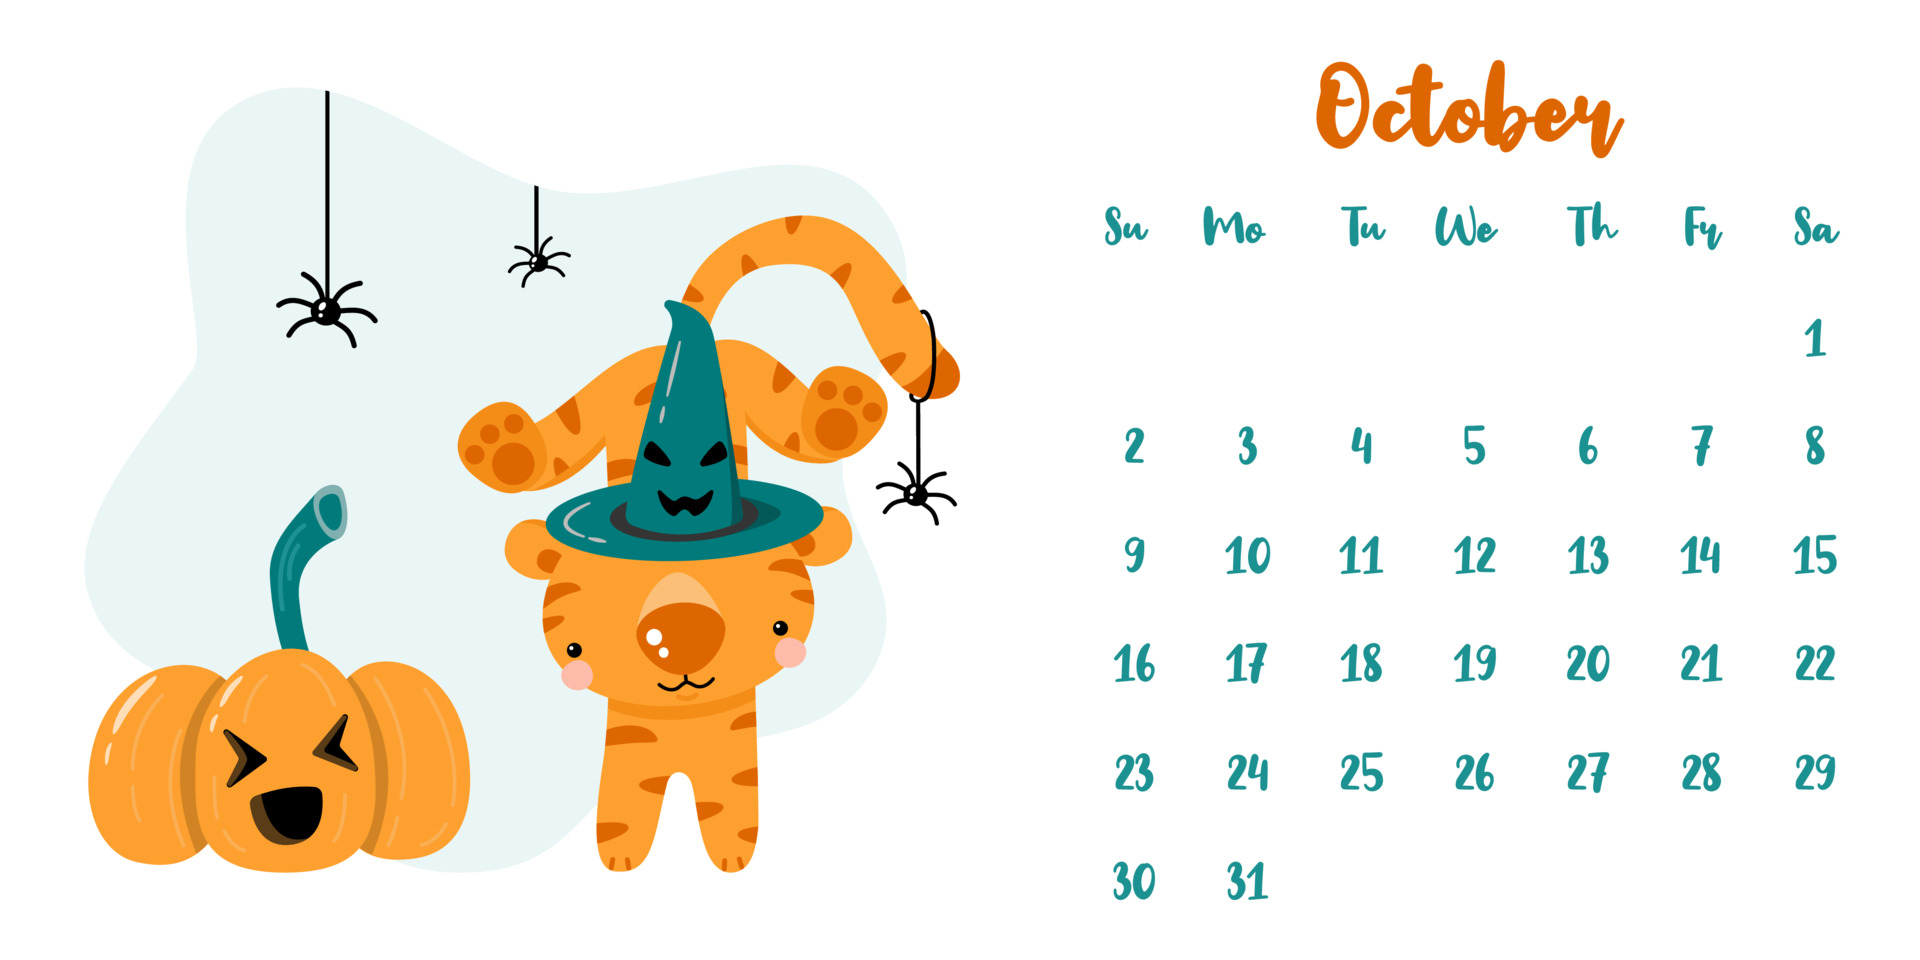 Halloween Calendar 2022 Calendar For October 2022 With Cute Cartoon Tiger And Halloween Pumpkin  3479940 Vector Art At Vecteezy